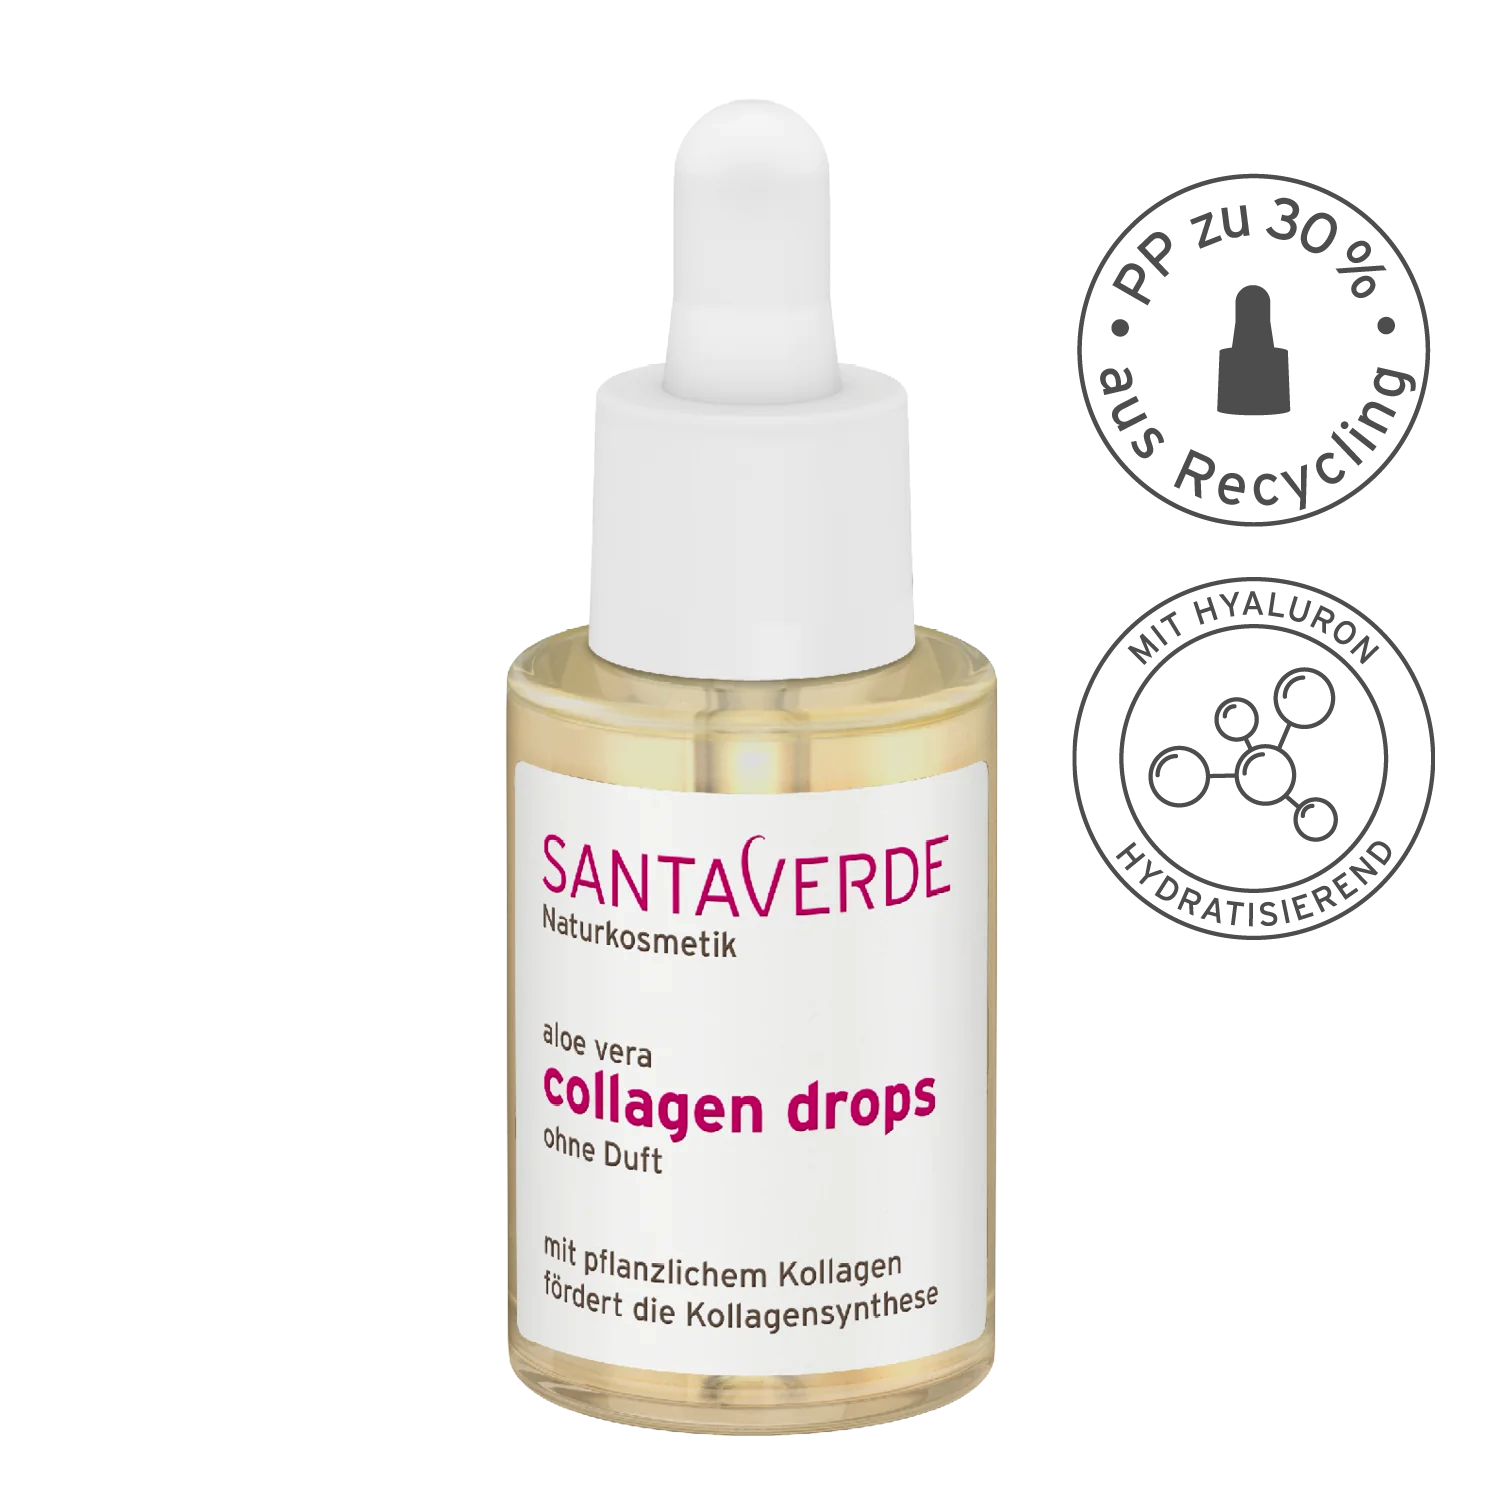 Santaverde collagen drops | 30ml | Aloe Vera & ohne Duft